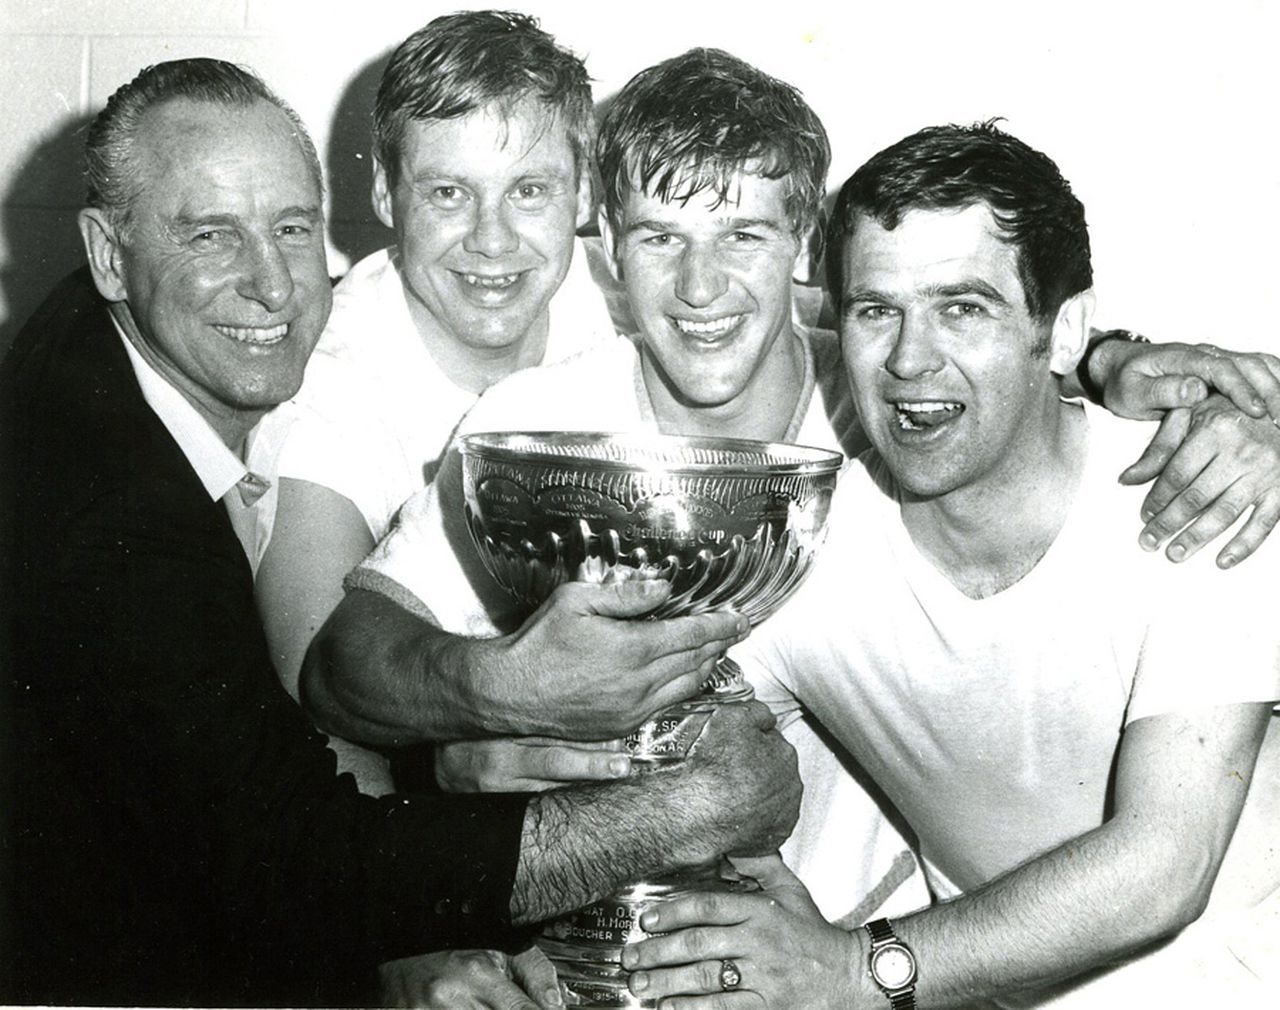 Bobby Orr Phil Esposito memories Boston Bruins champions thank you